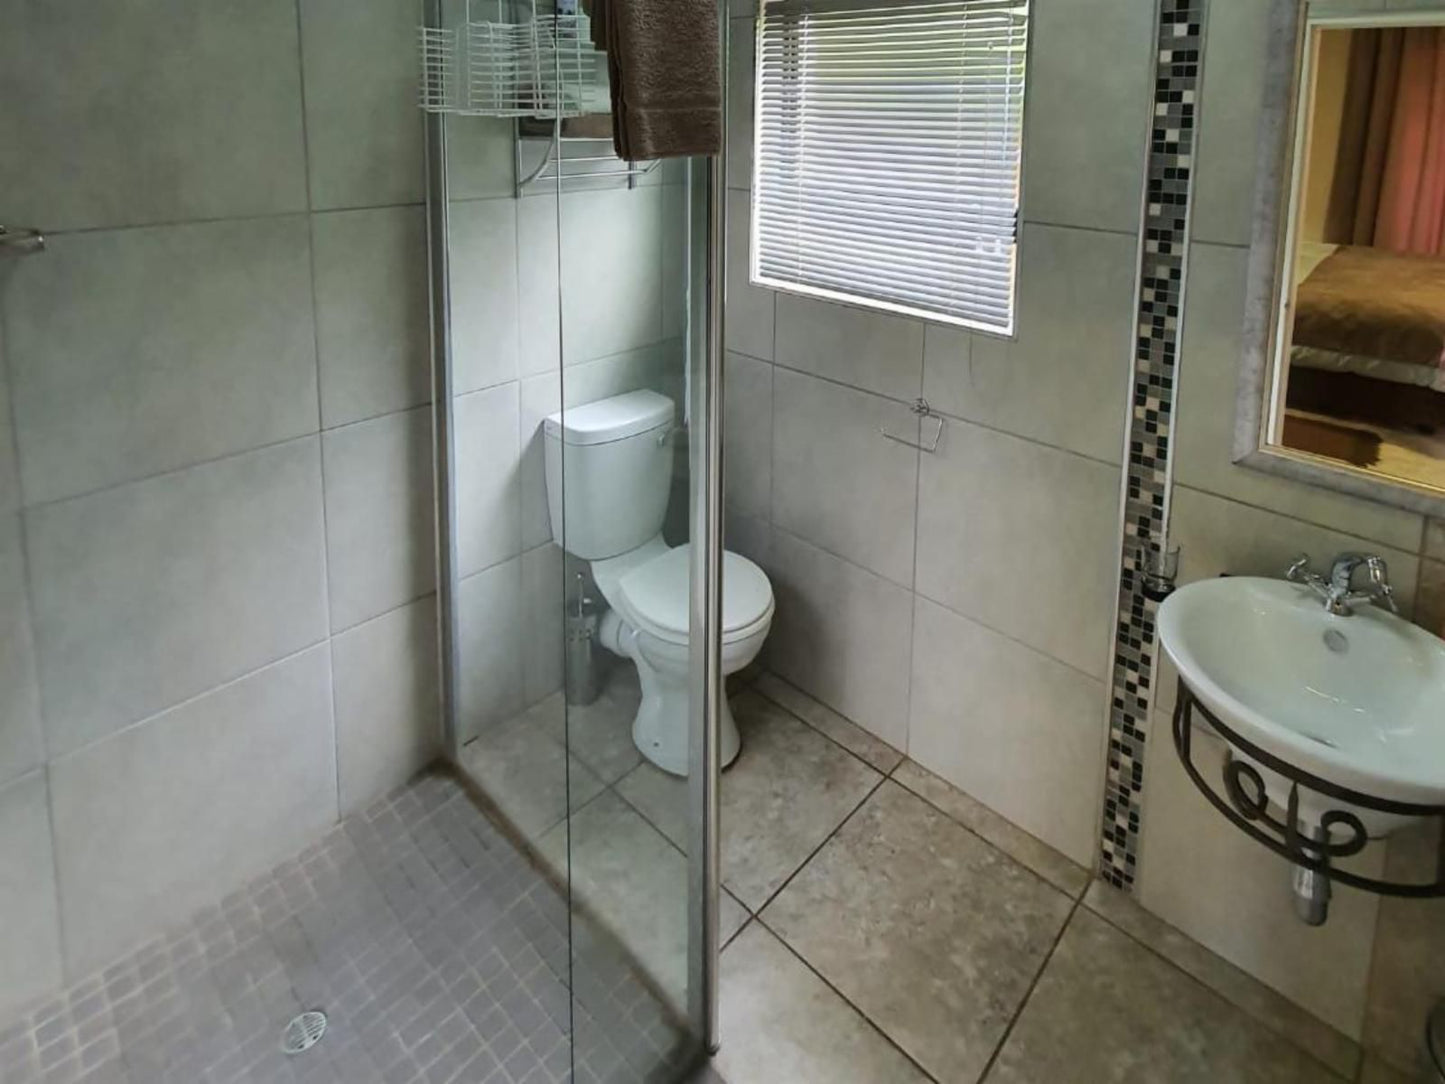 Huis Van Seisoene Wilkoppies Klerksdorp North West Province South Africa Unsaturated, Bathroom